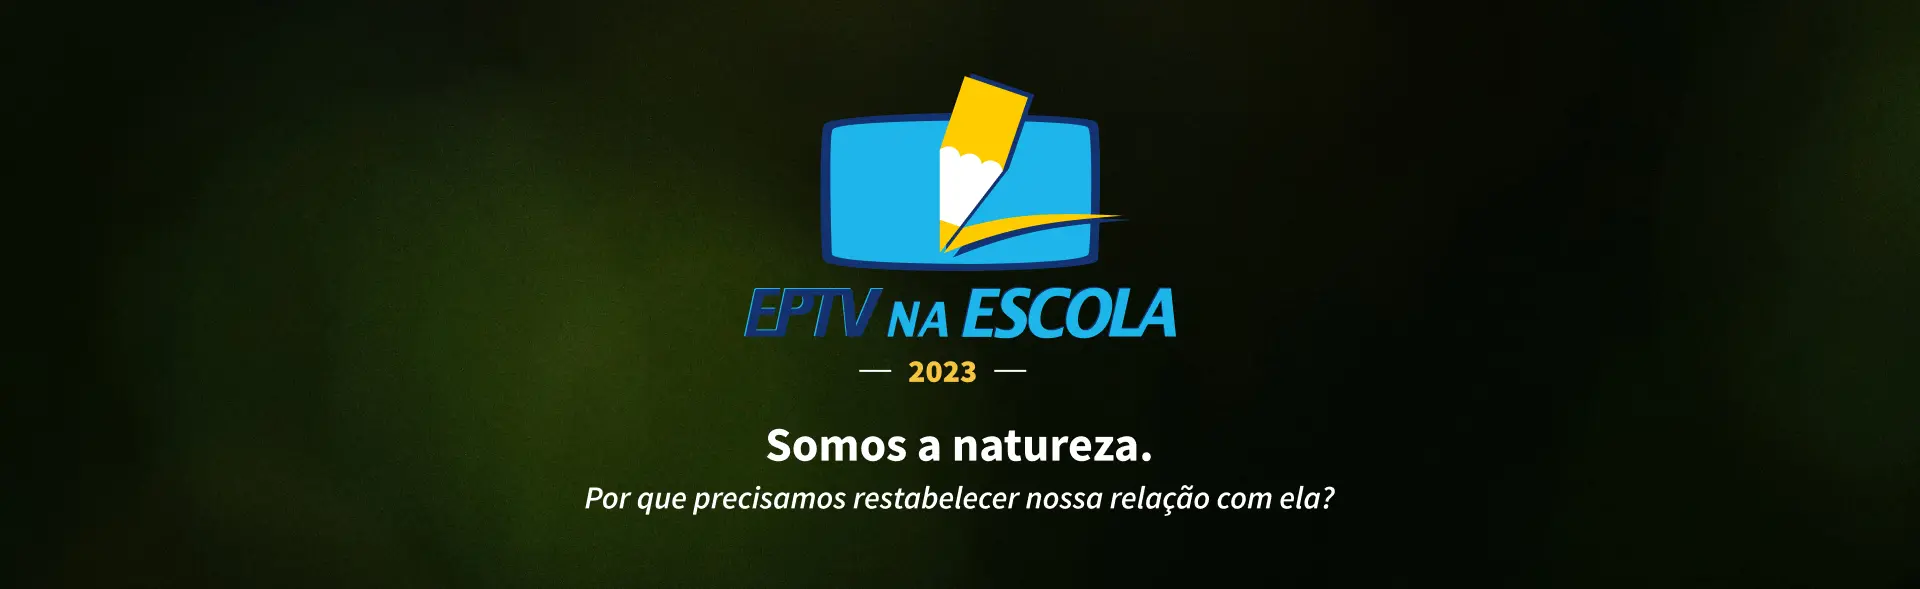 EPTV na Escola 2023